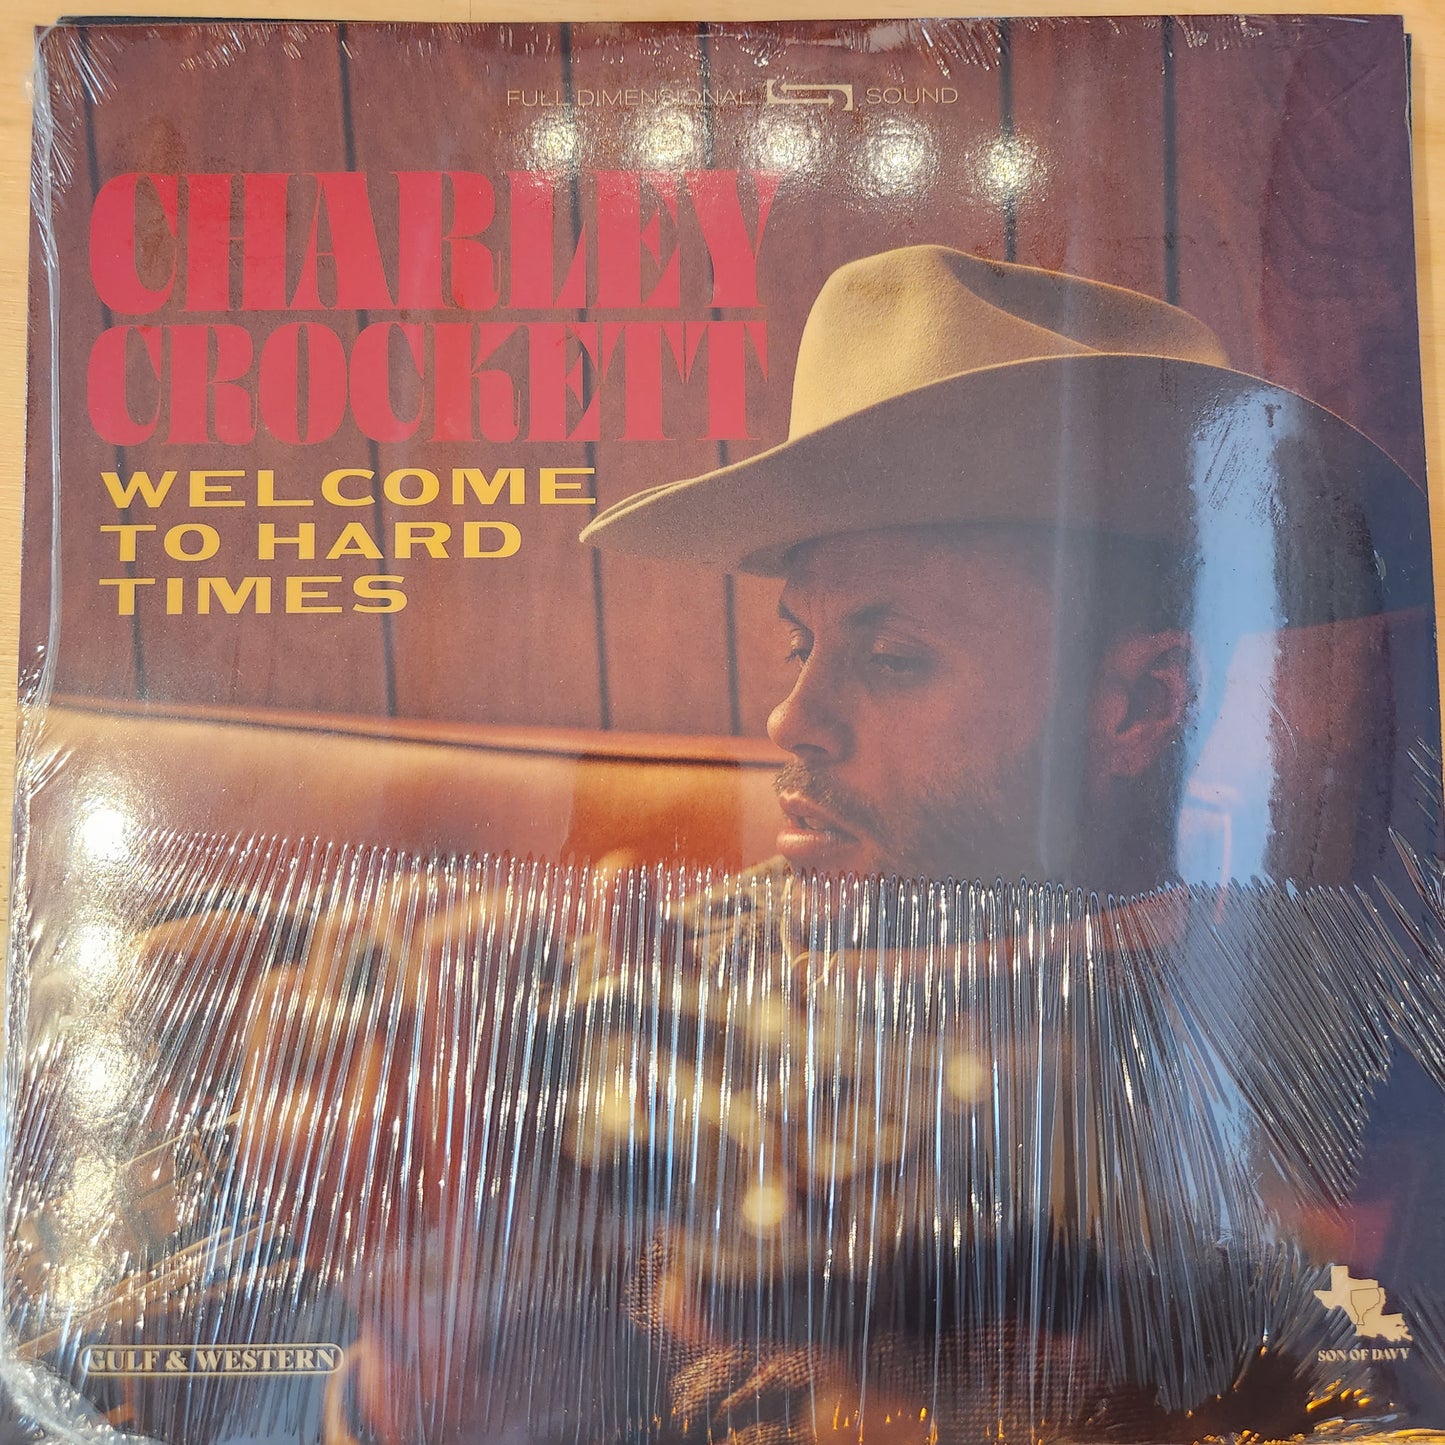 Charley Crockett - Welcome to hard times - Vinyl LP